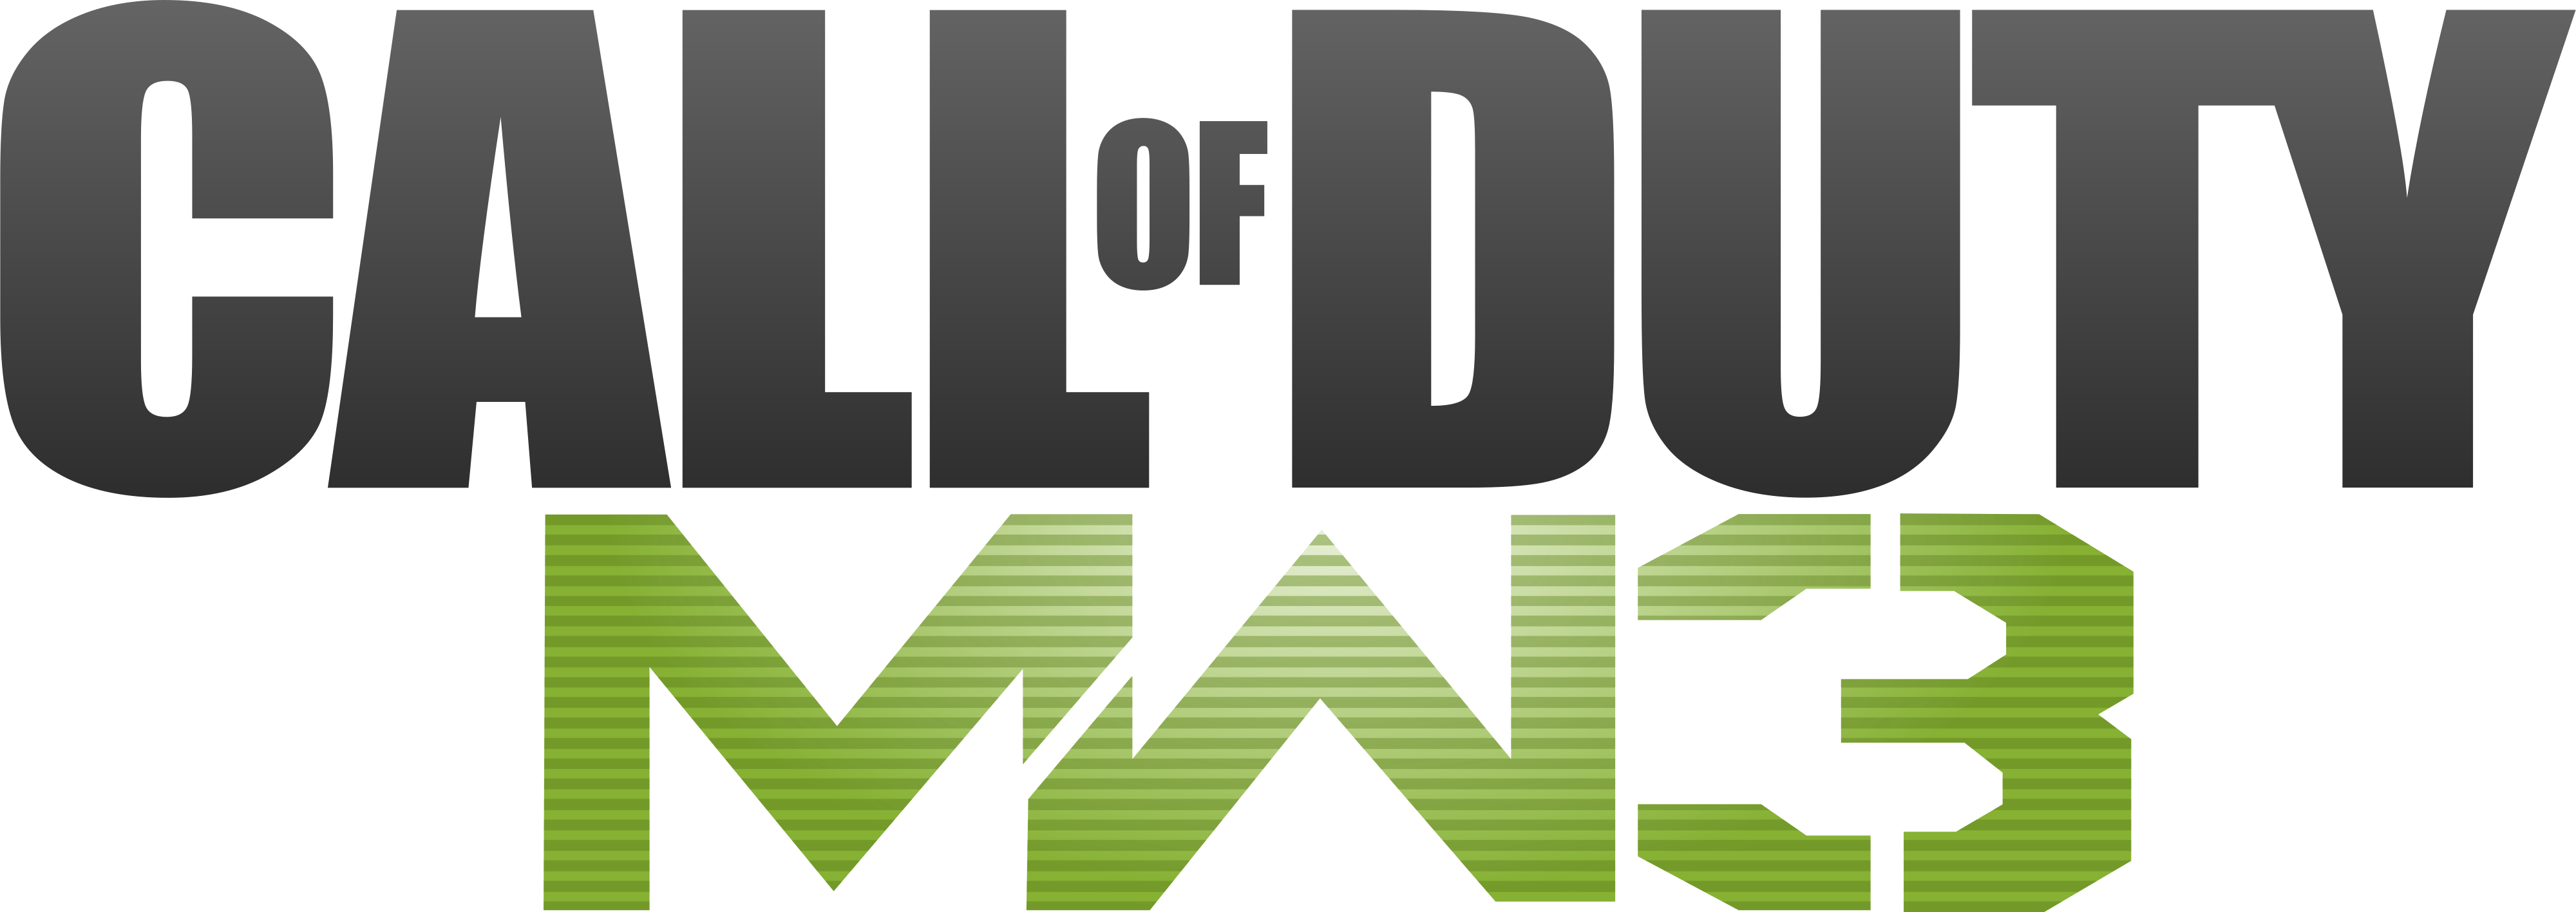 Call of Duty Modern Warfare 3 logo download.